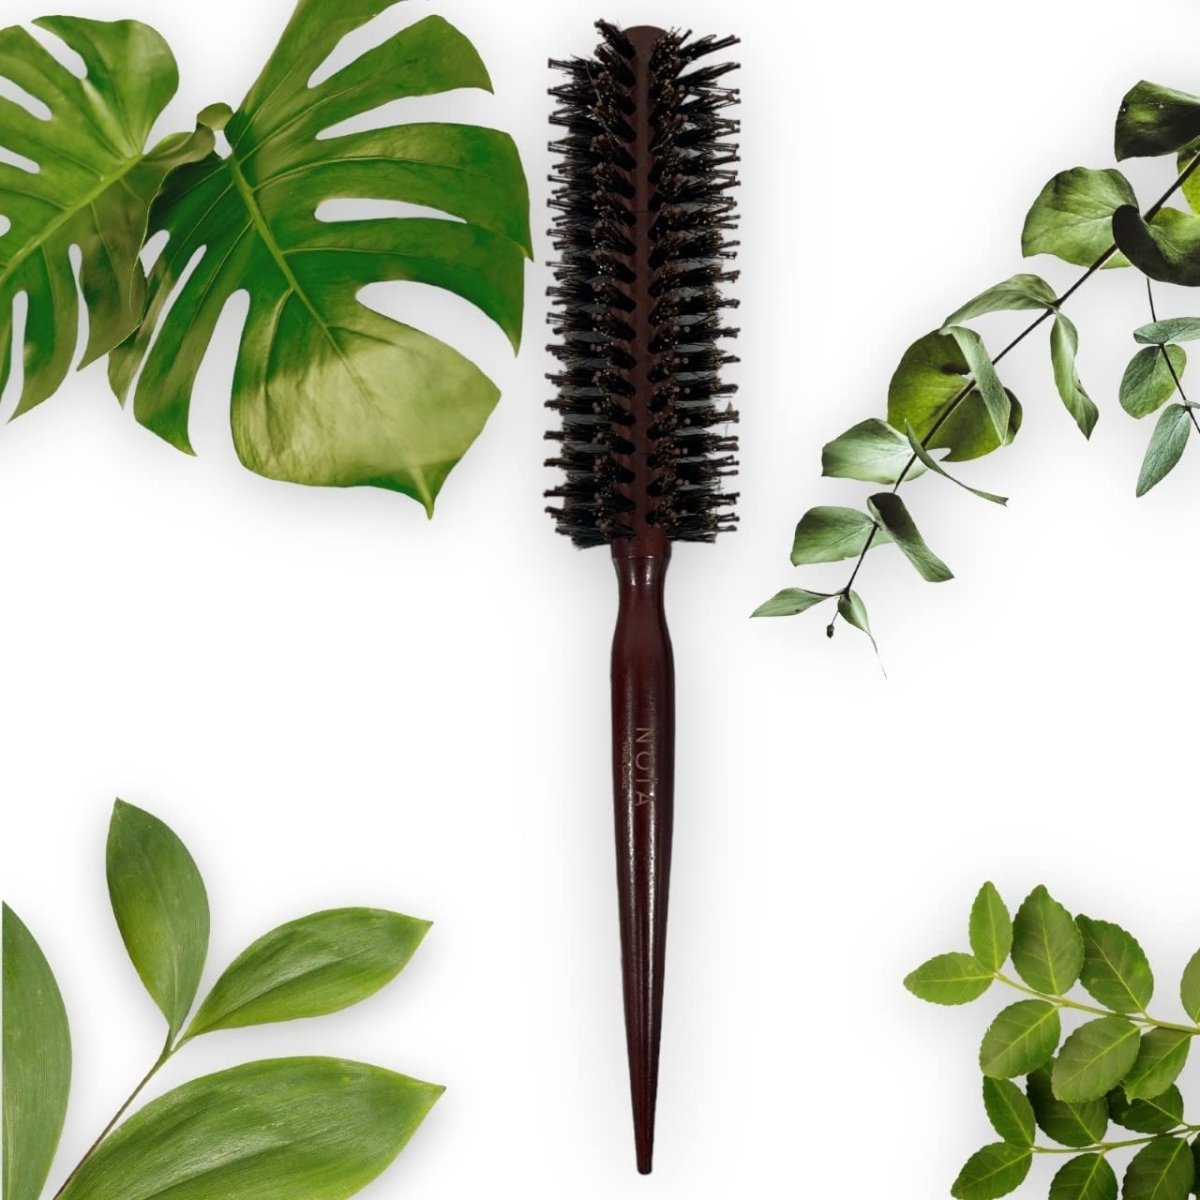 NOIA HAIR - Brosse à Cheveux Ronde Brushing (Brosse ronde 22mm) - BEAUTEPRICE NOIA HAIR - Brosse à Cheveux Ronde Brushing (Brosse ronde 22mm) NOÏA HAIR BEAUTEPRICE